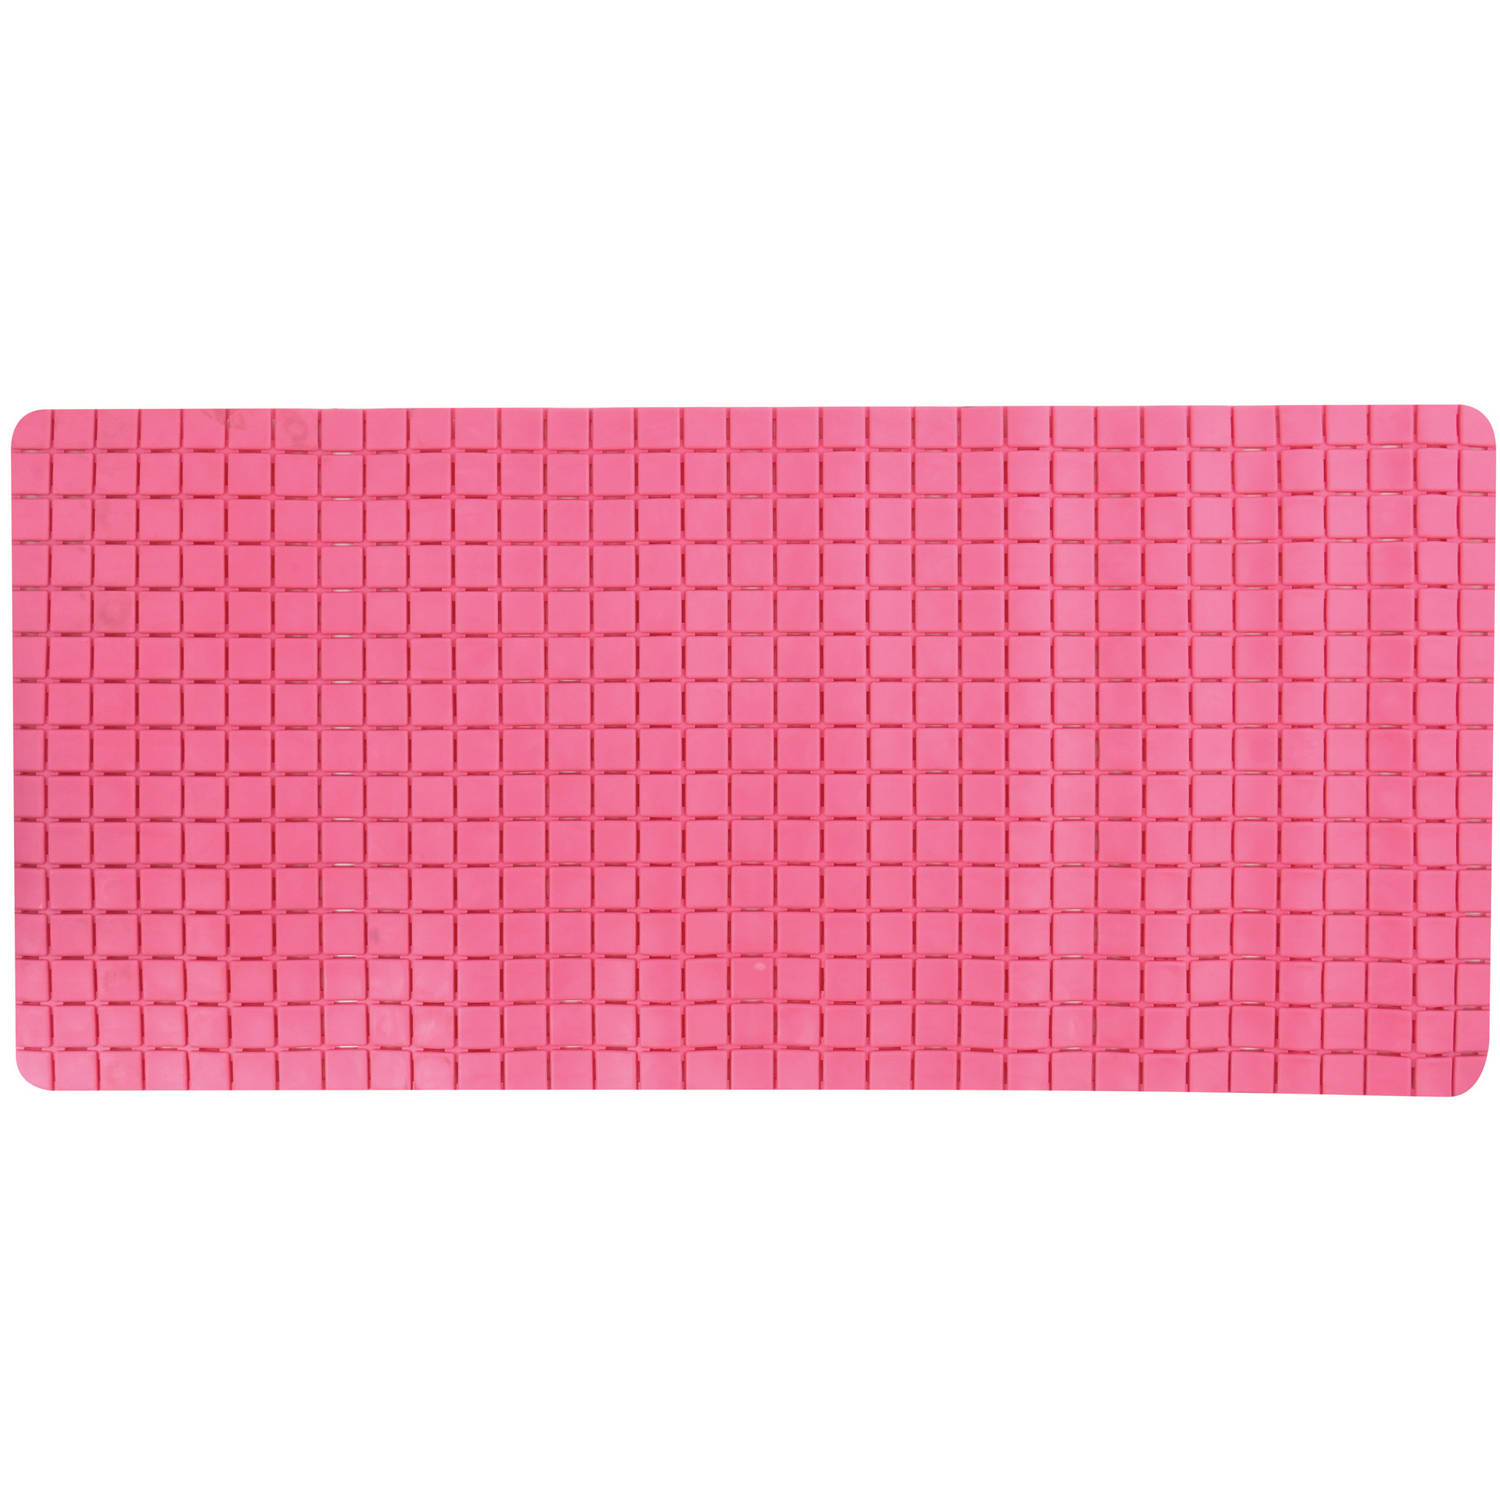 MSV Douche/bad anti-slip mat badkamer - rubber - fuchsia roze - 76 x 36 cm - met zuignappen